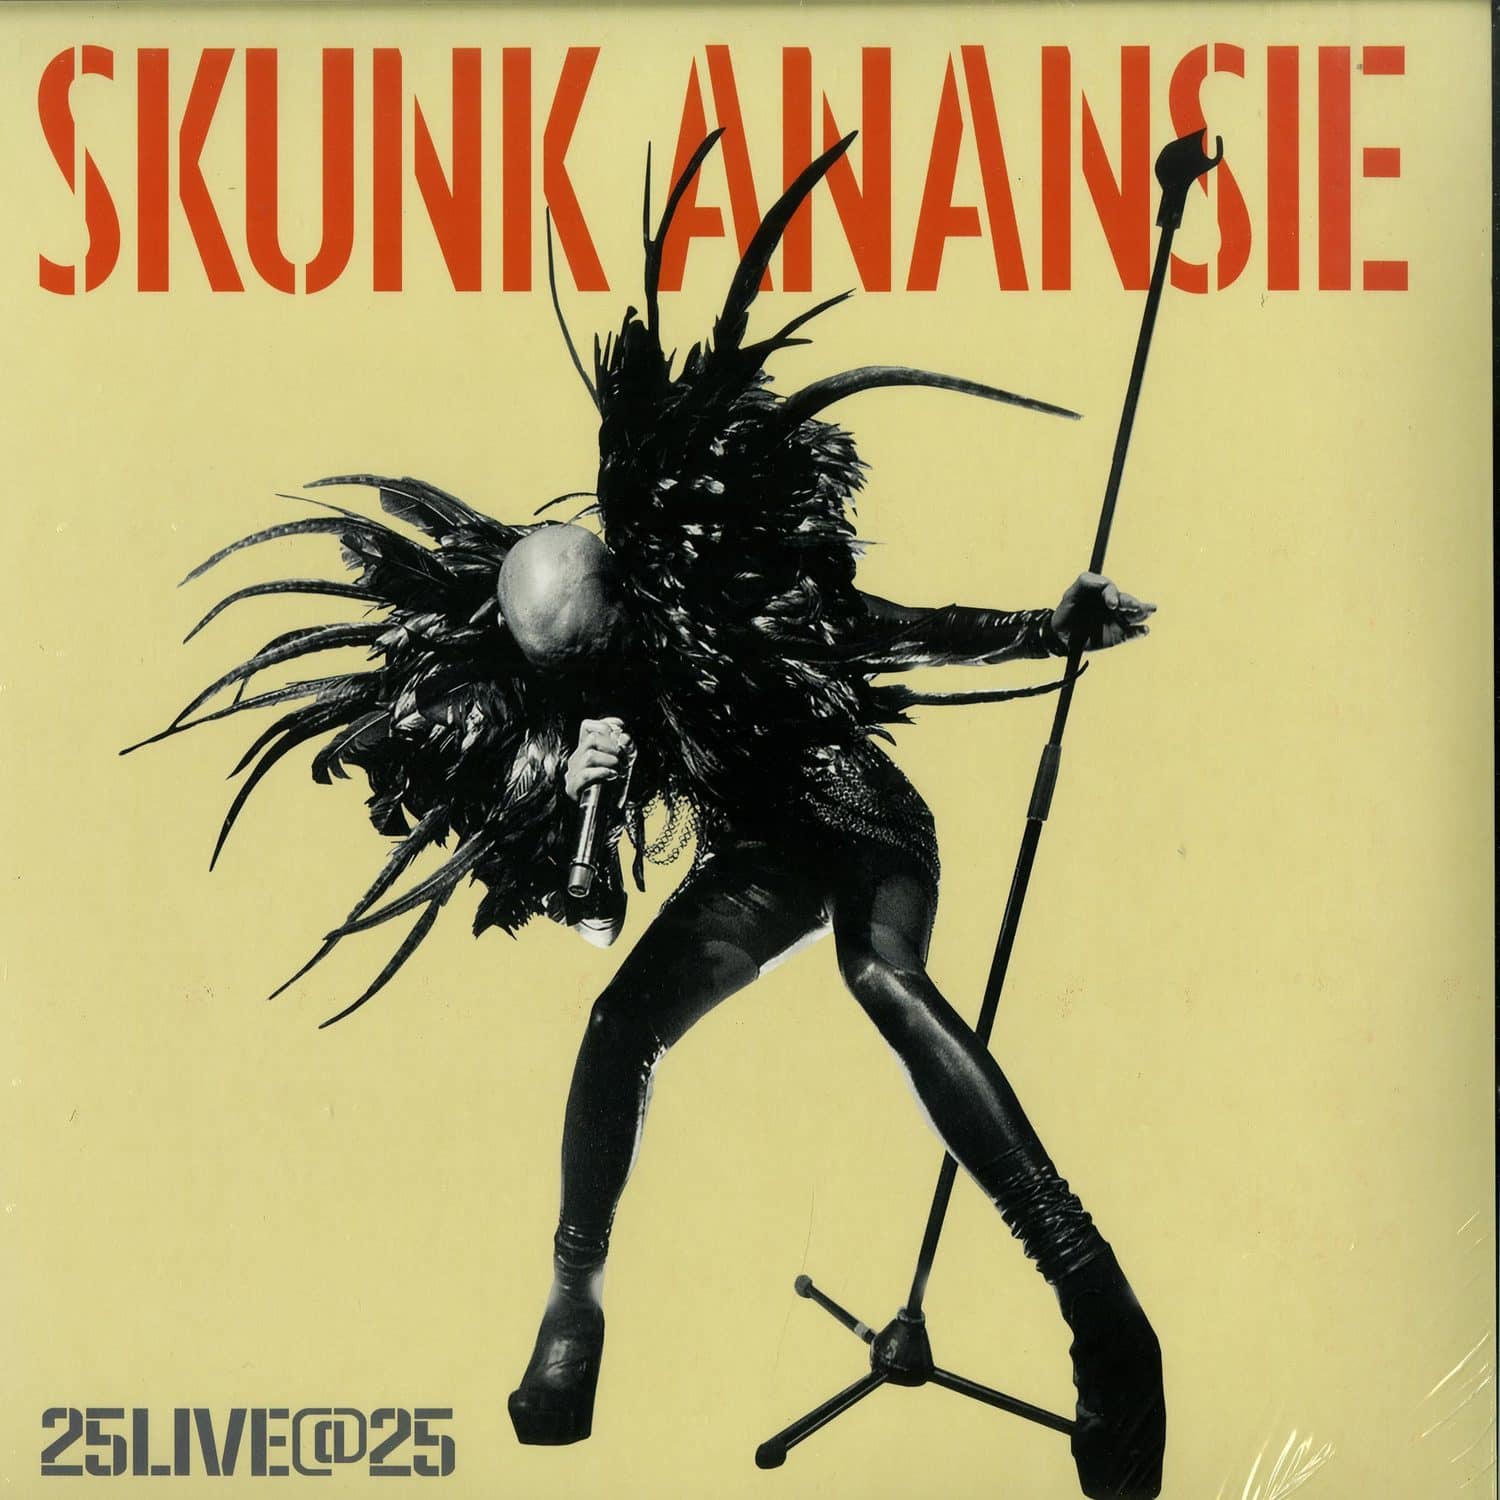 Skunk Anansie - 25LIVE@25 